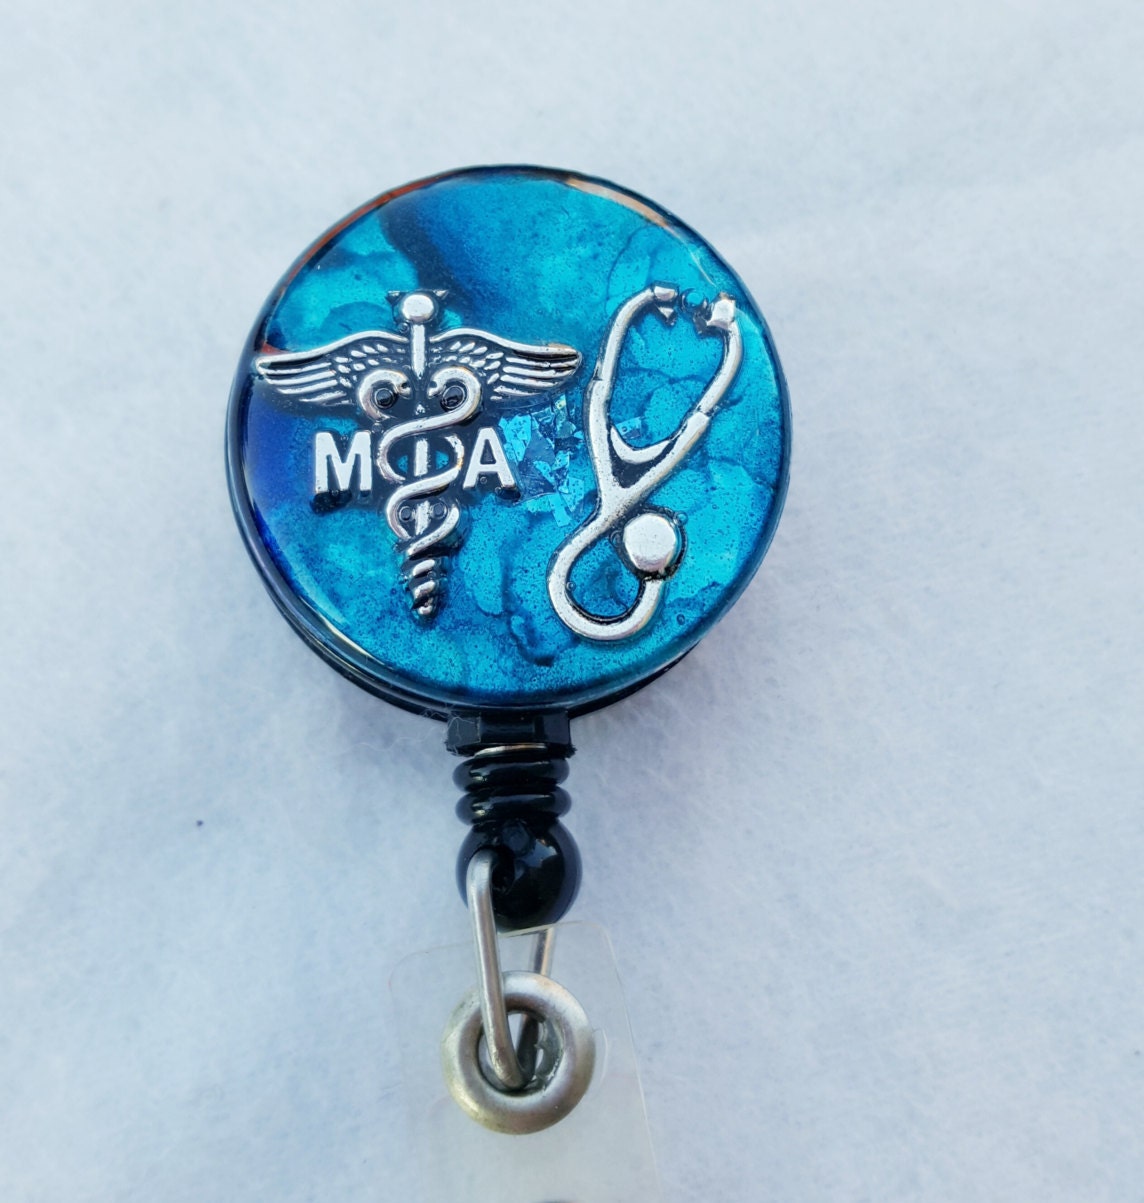 Medical Assistant name badge holder with a teal/blue